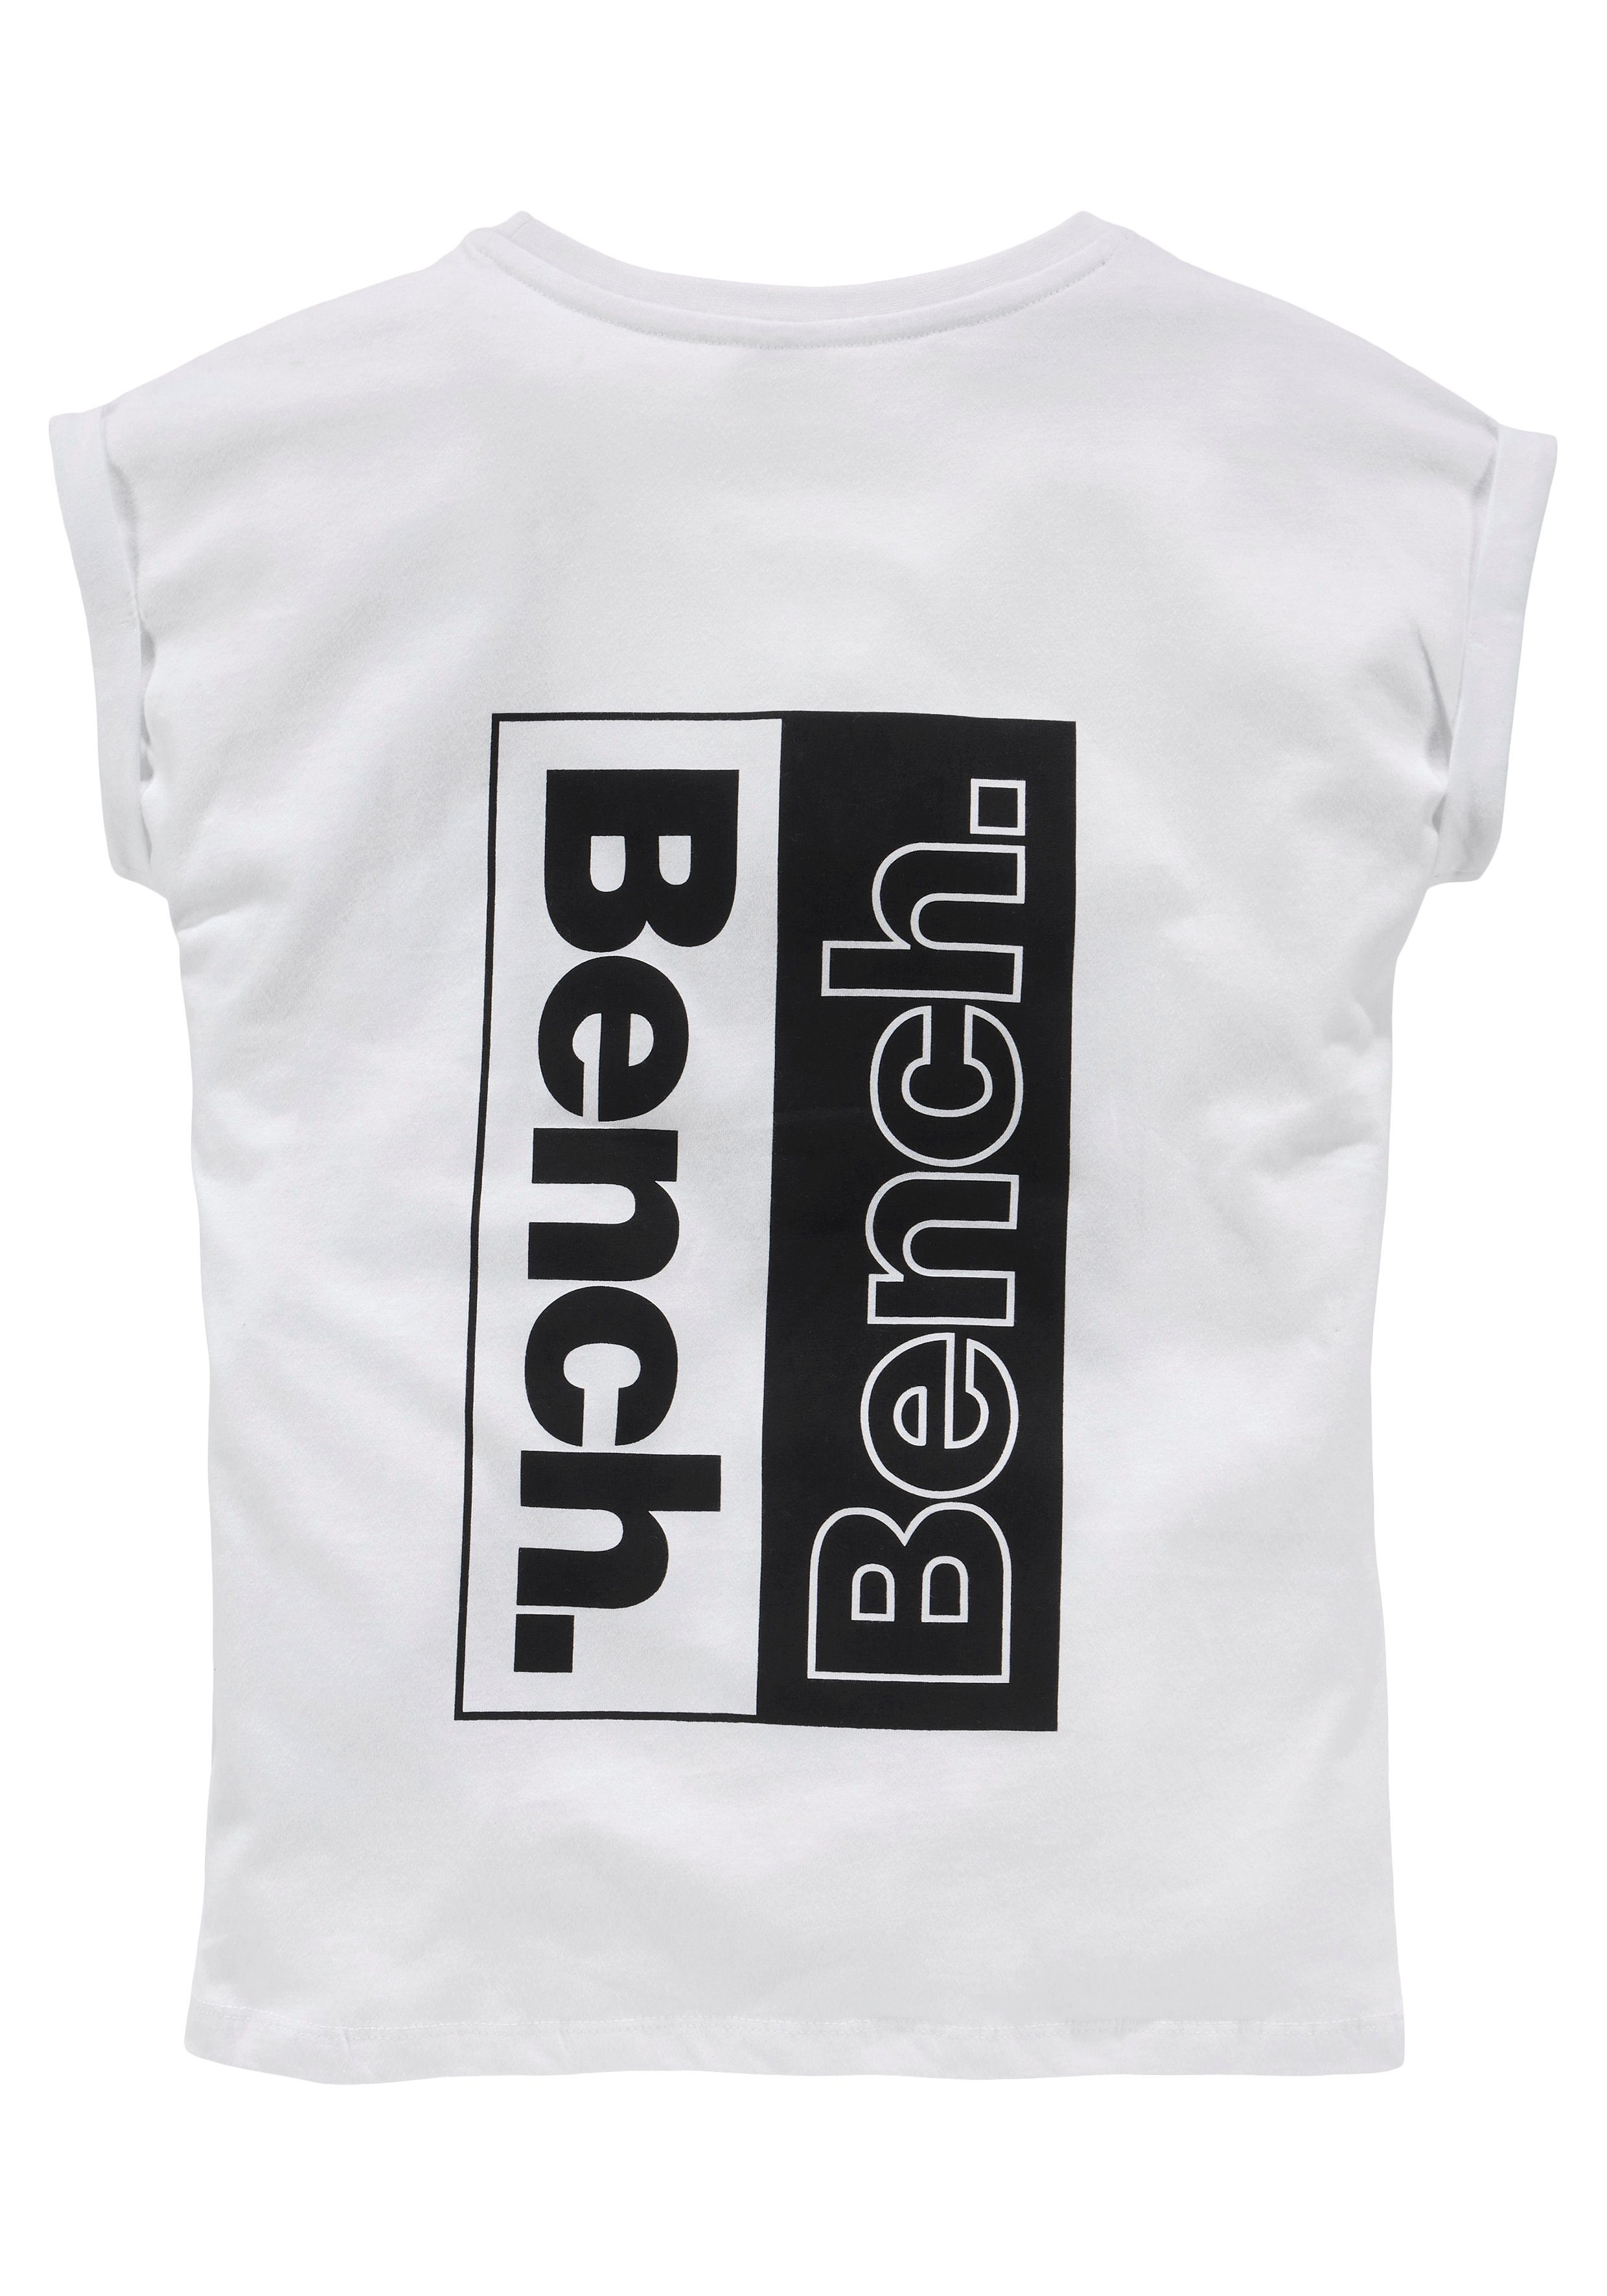 Bench. Logo mit T-Shirt Rückendruck